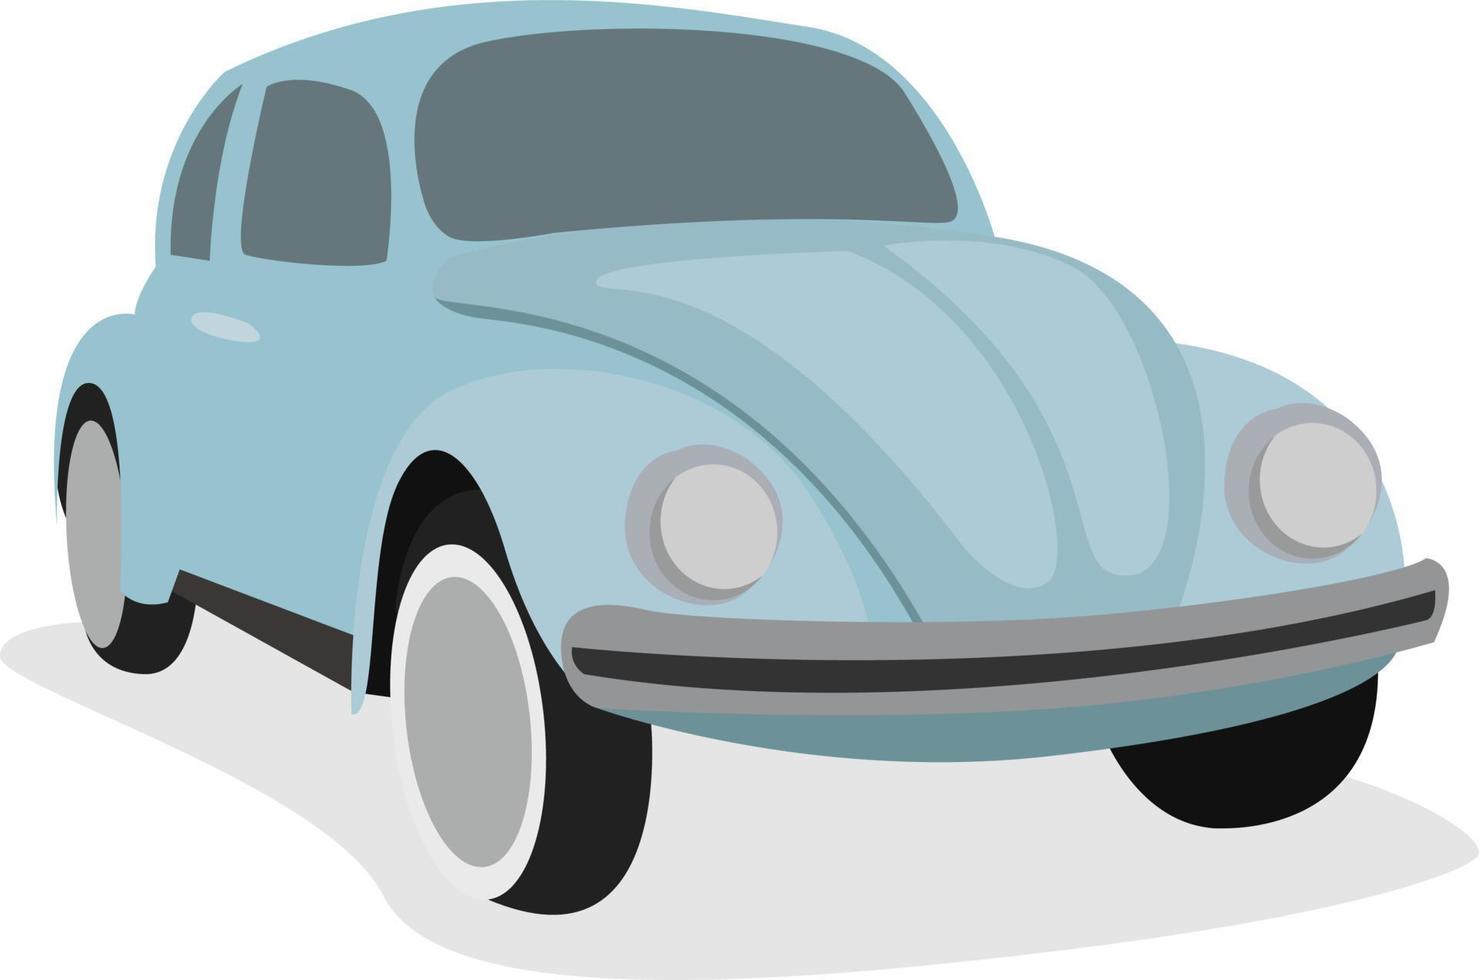 Beetle car, illustration, vector on white background